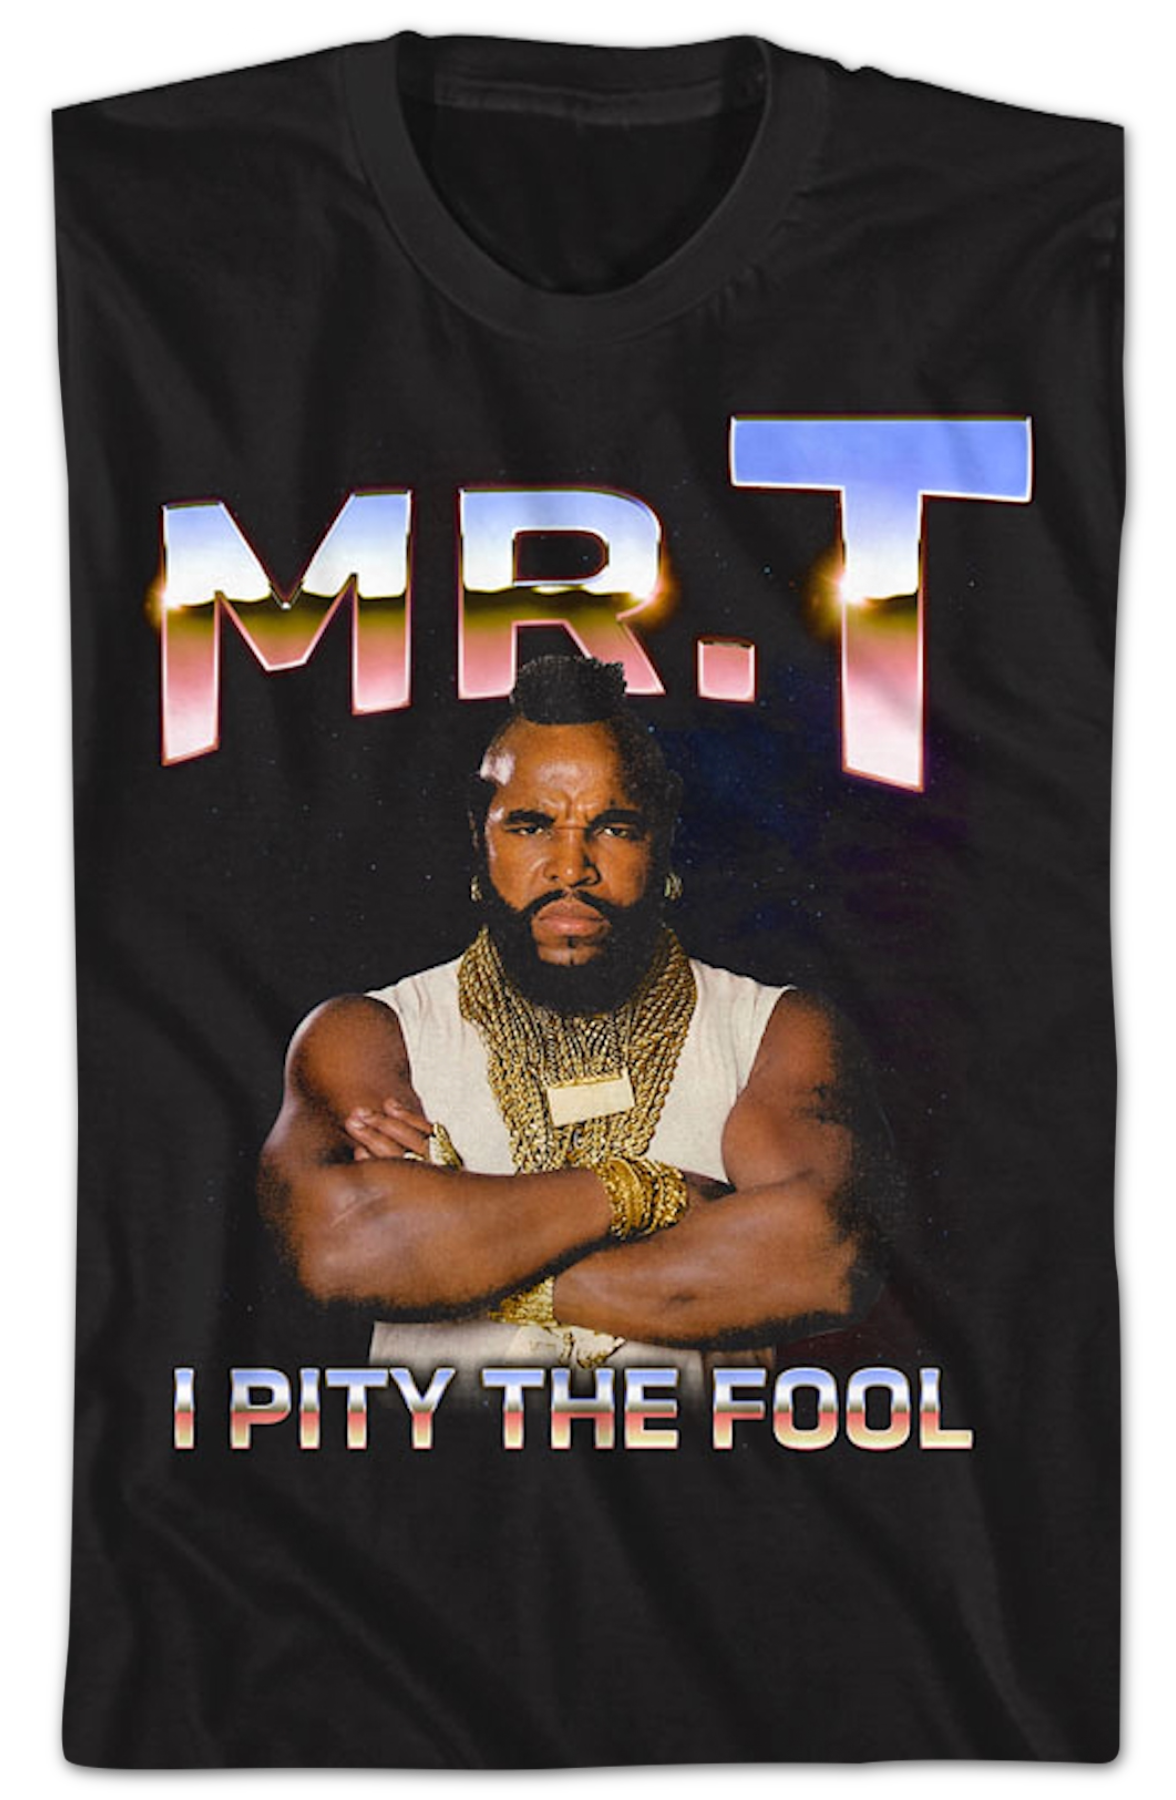 I Pity The Fool Metallic Colors Mr. T Shirt